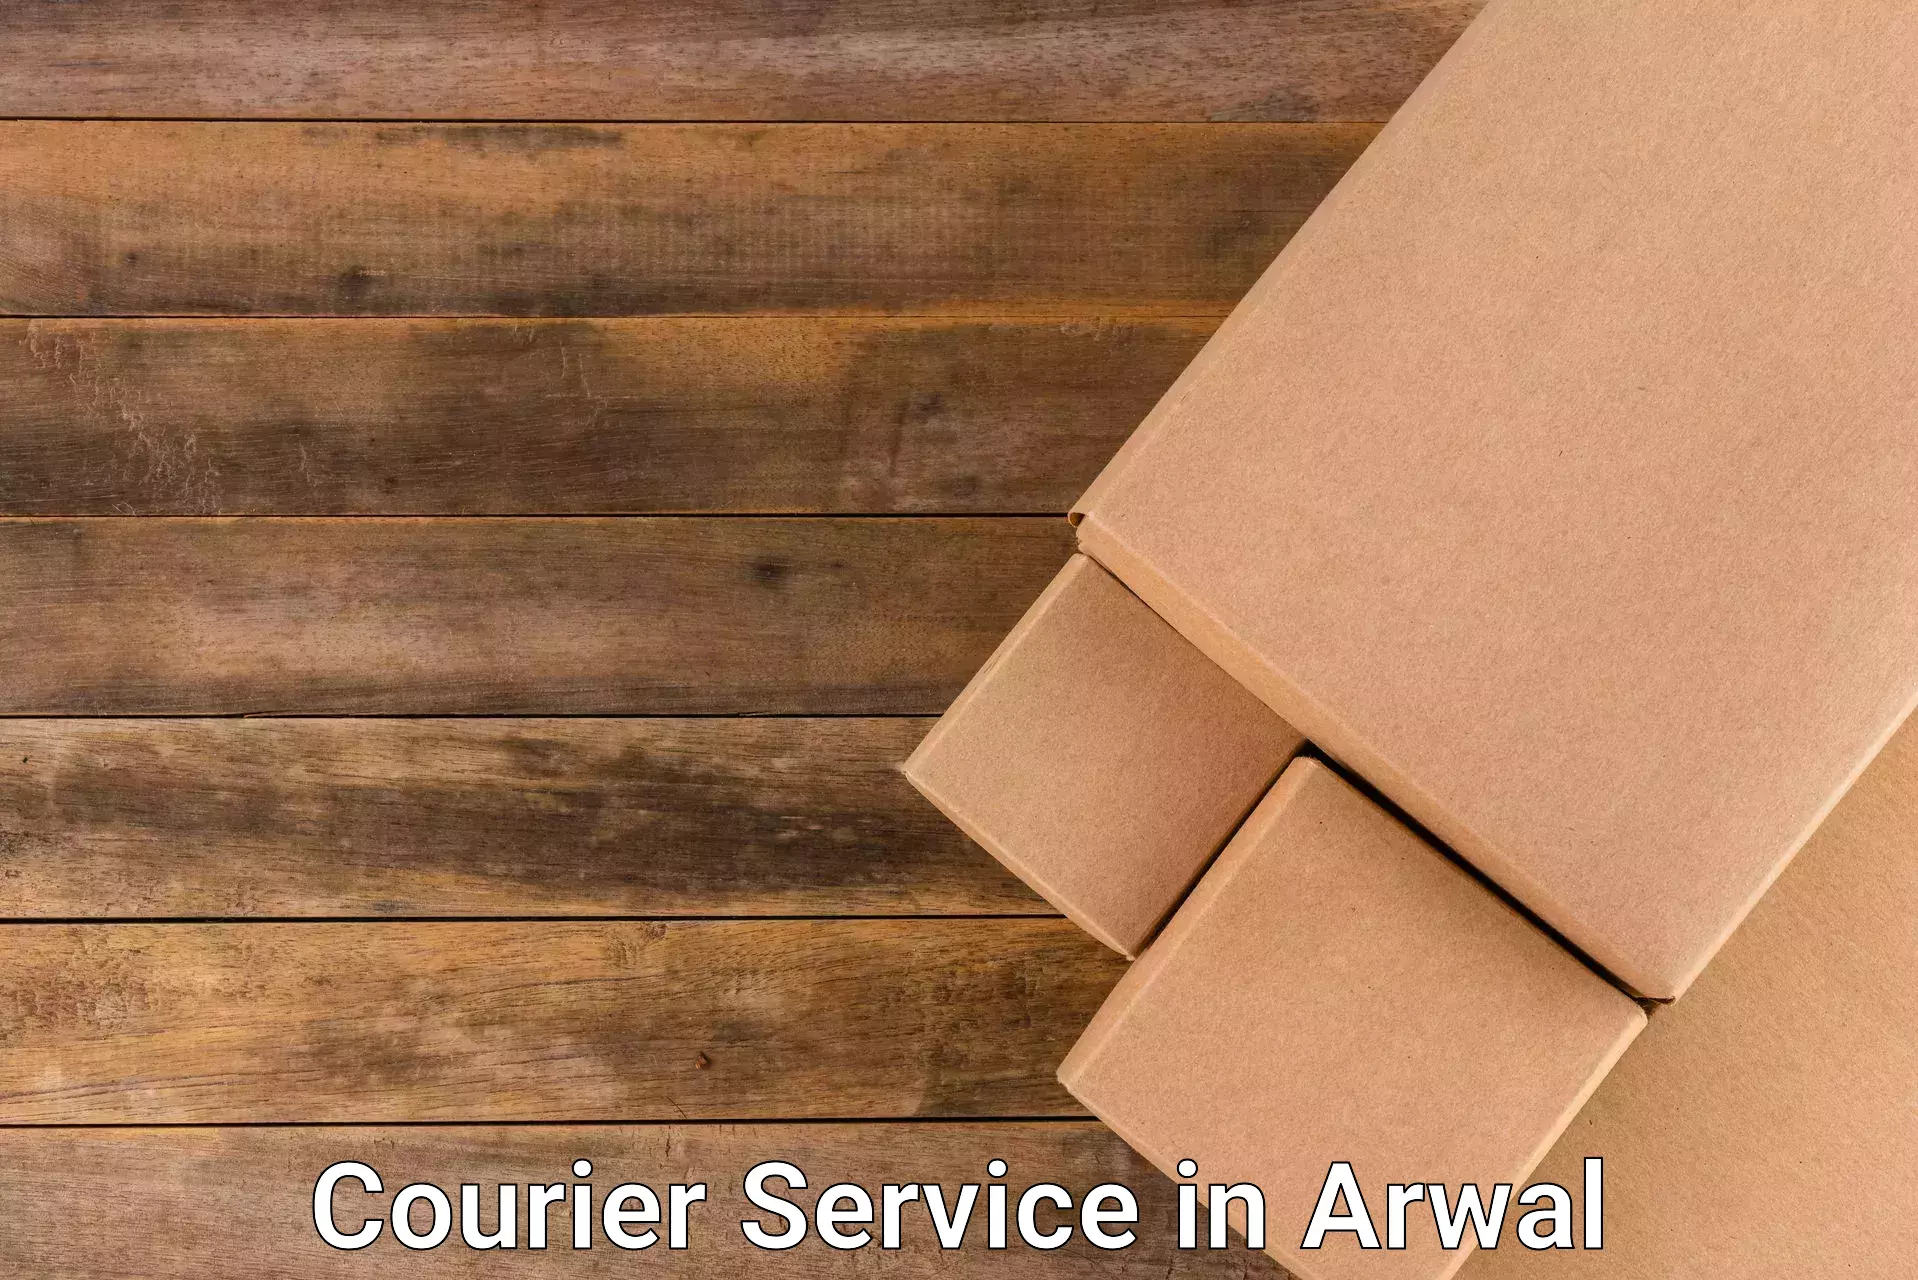 Efficient cargo handling in Arwal